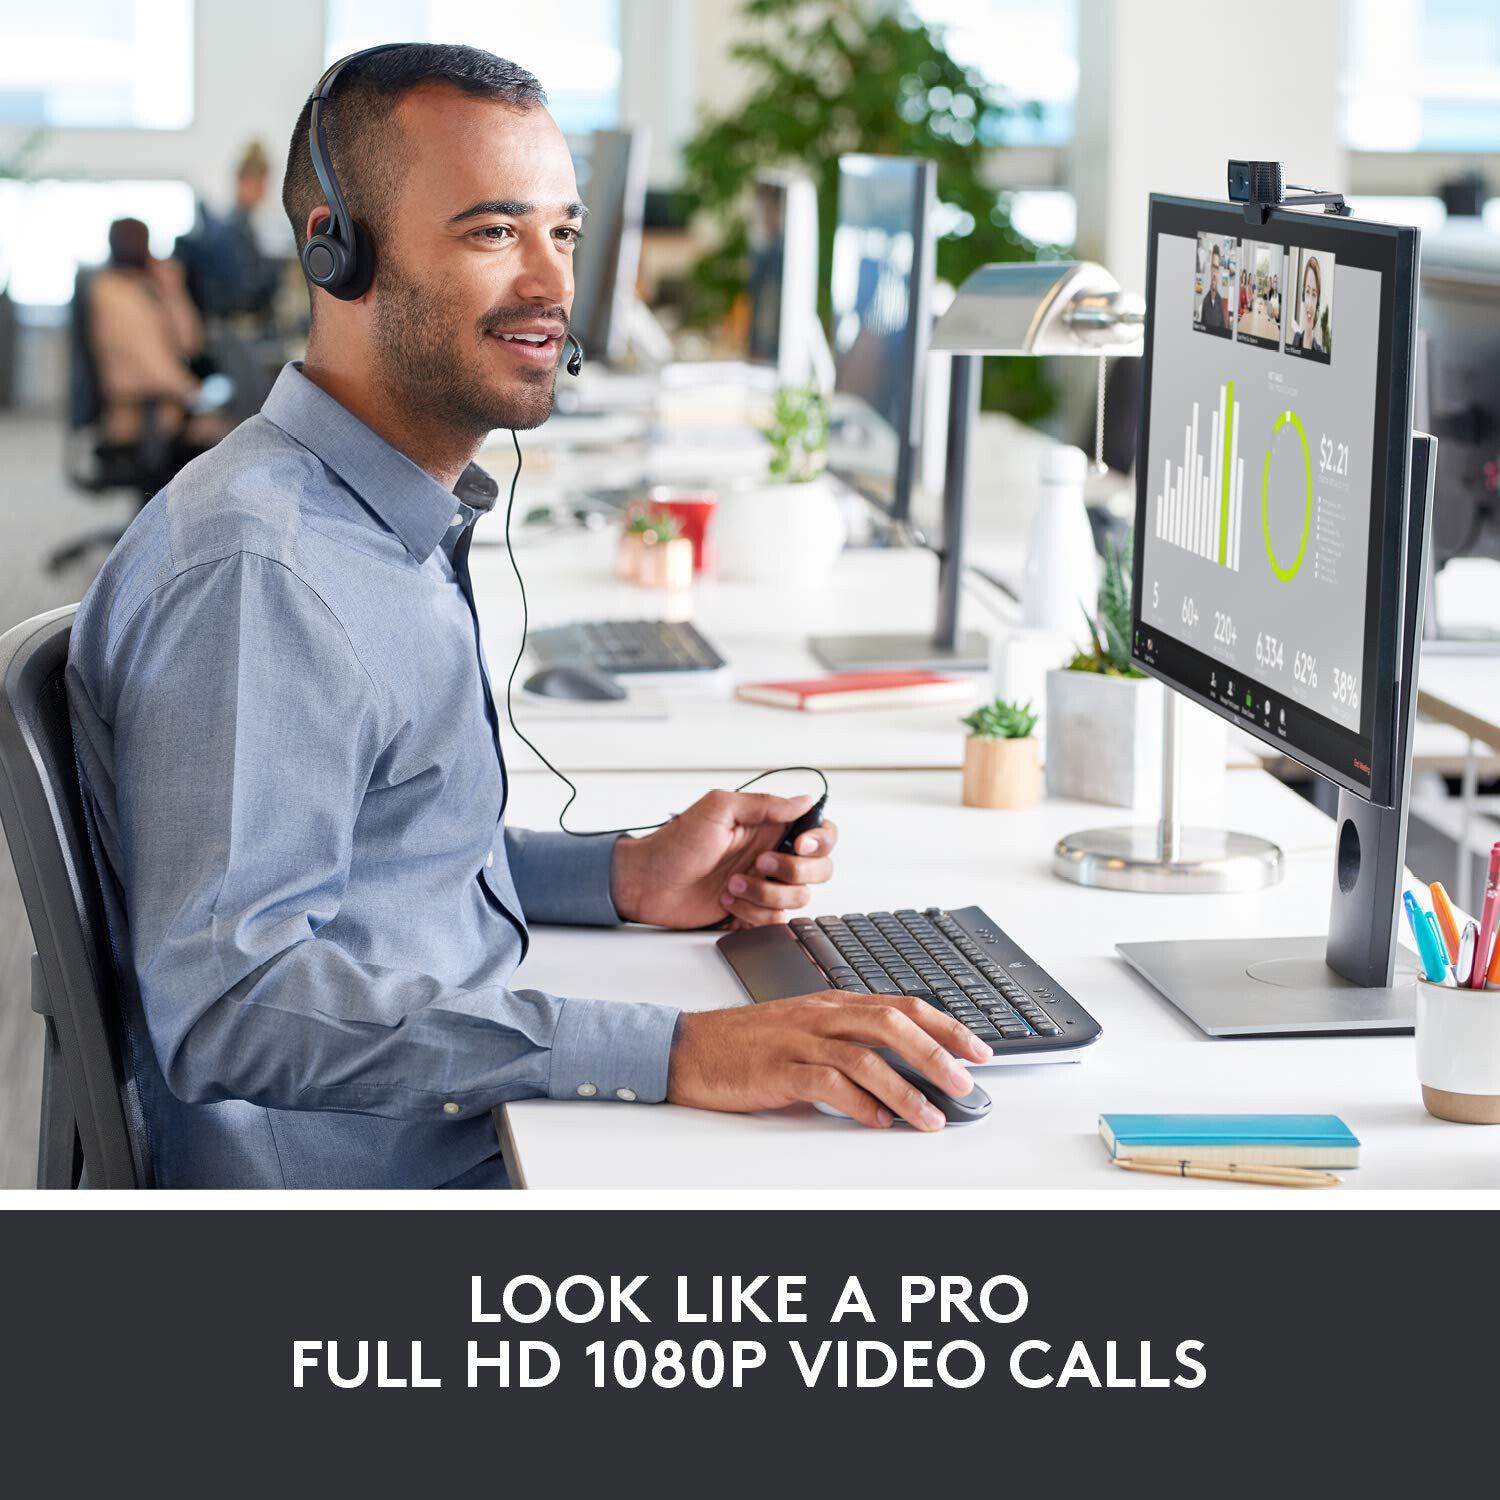 Webcam Logitech HD Pro C920 Refresh - Full HD 1080p avec deux